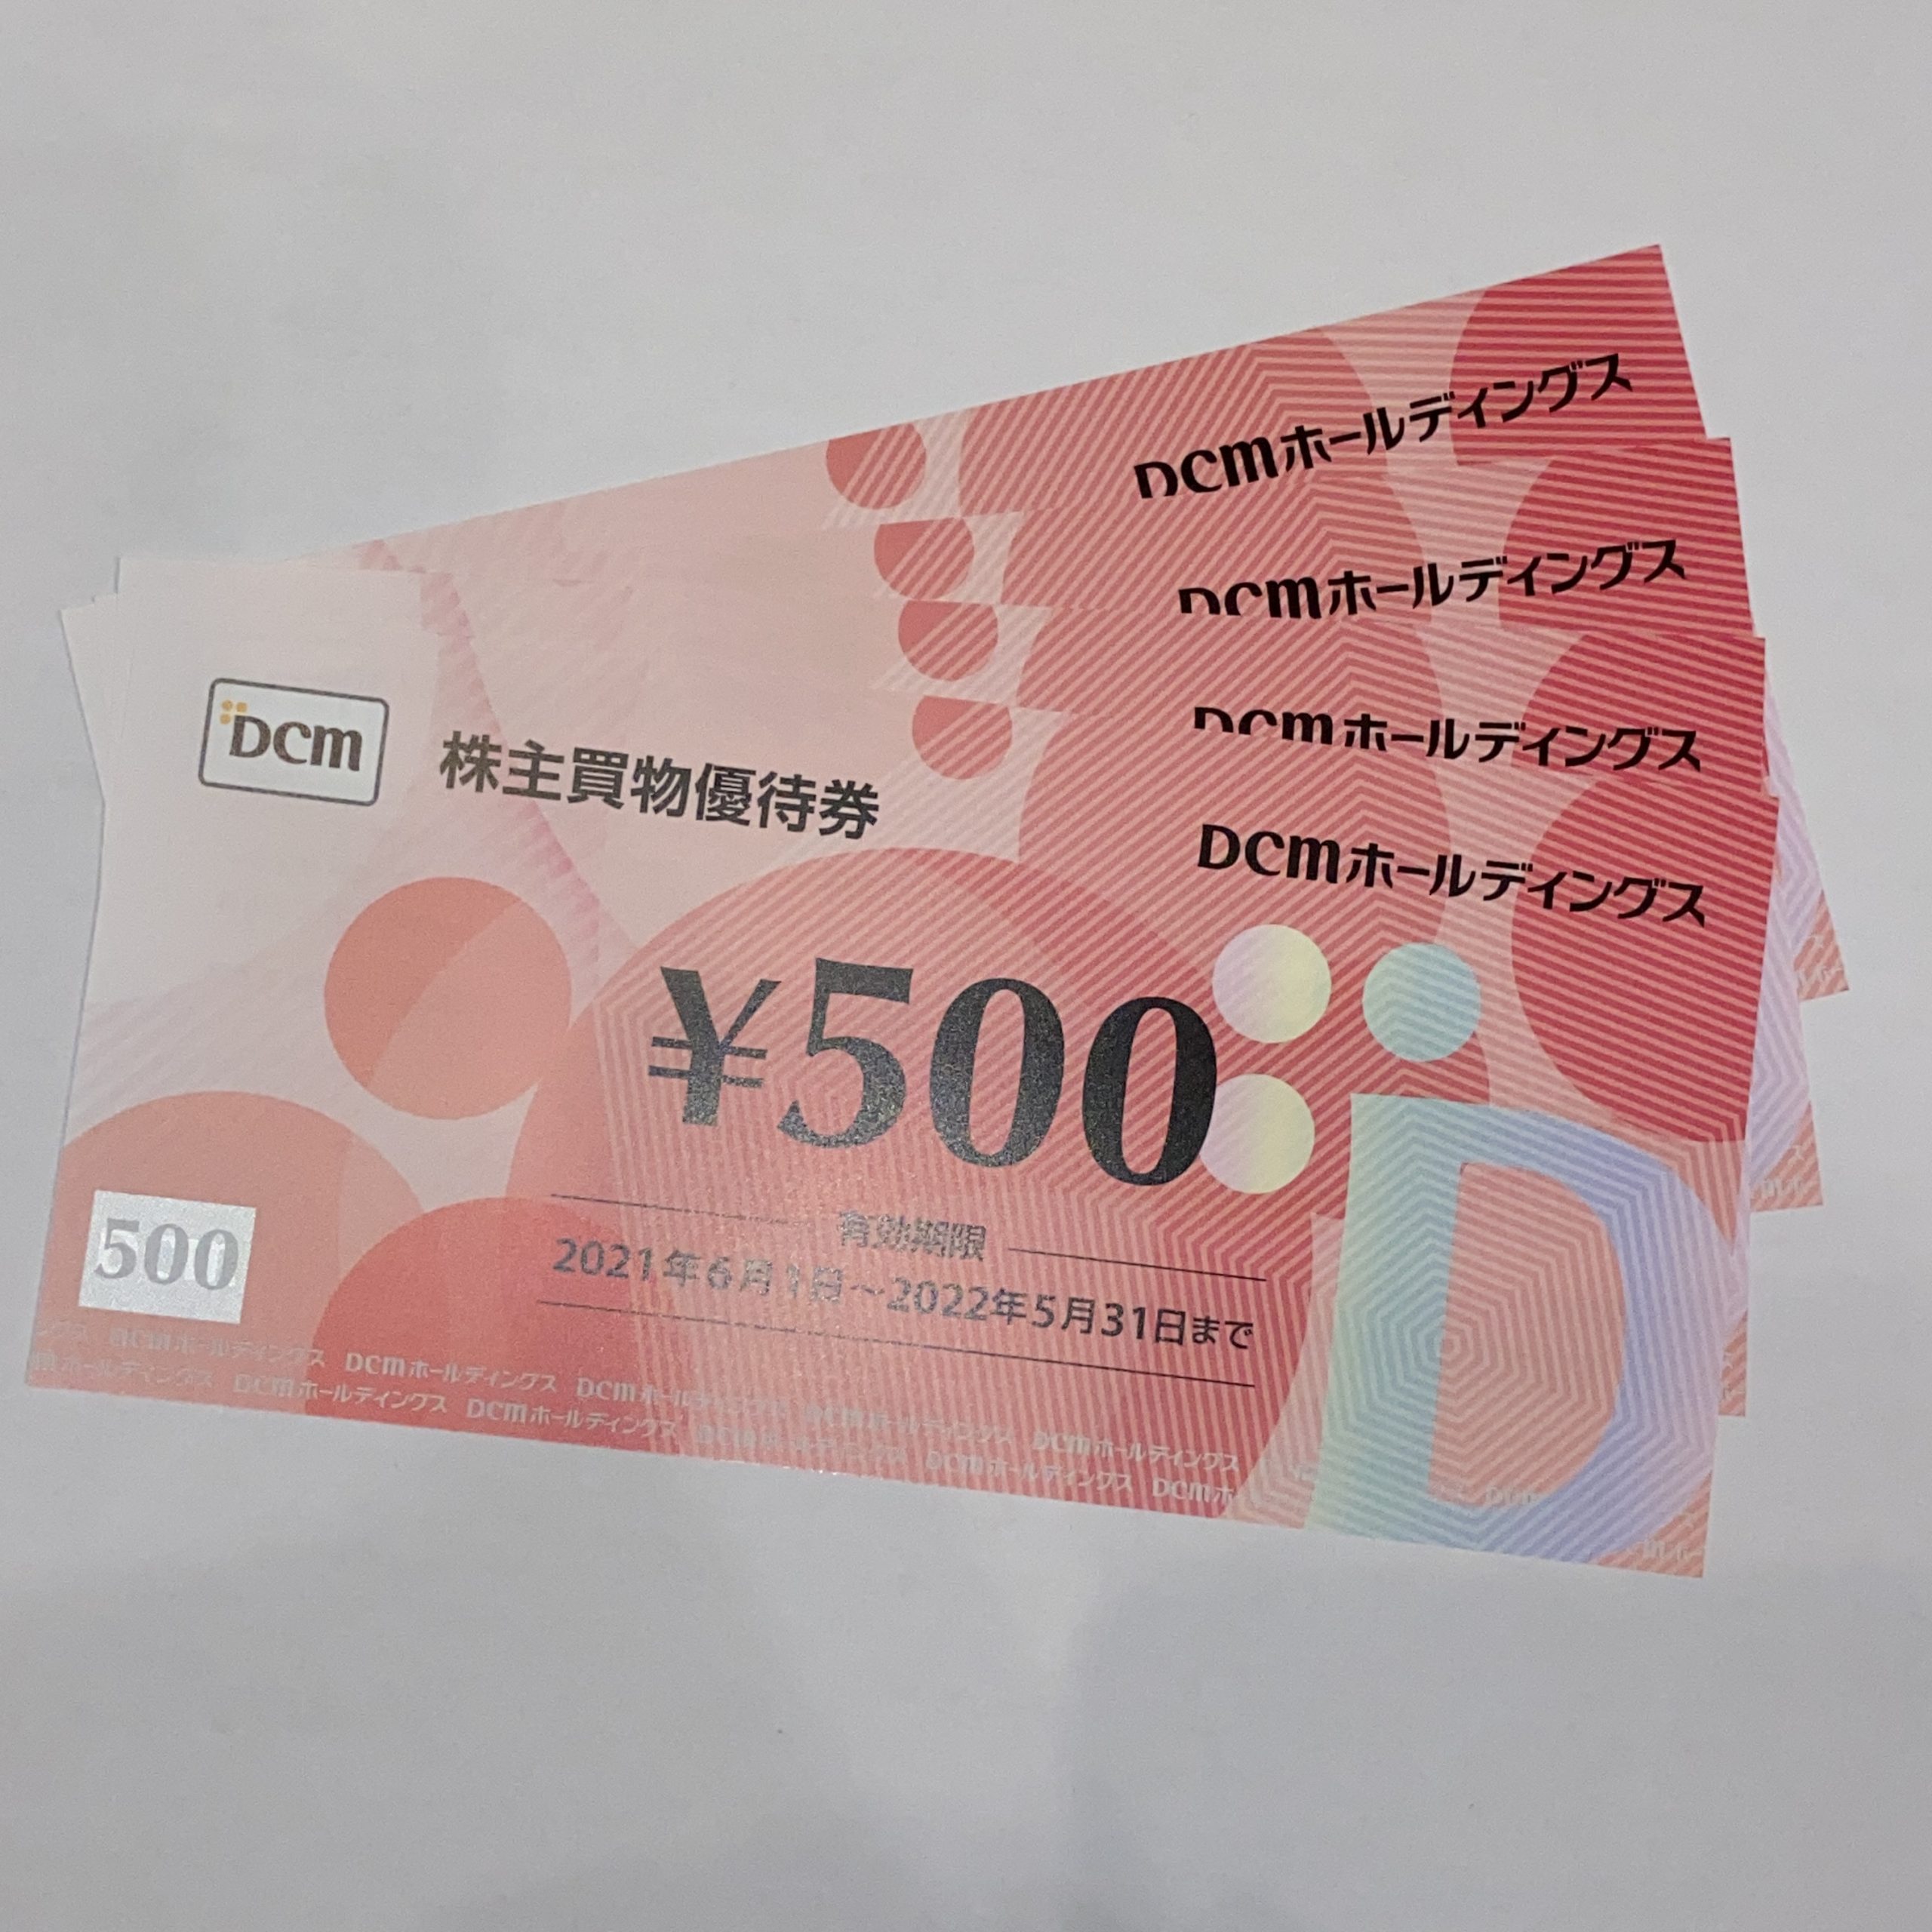 DCMホールディングス 株主買物優待券 500円